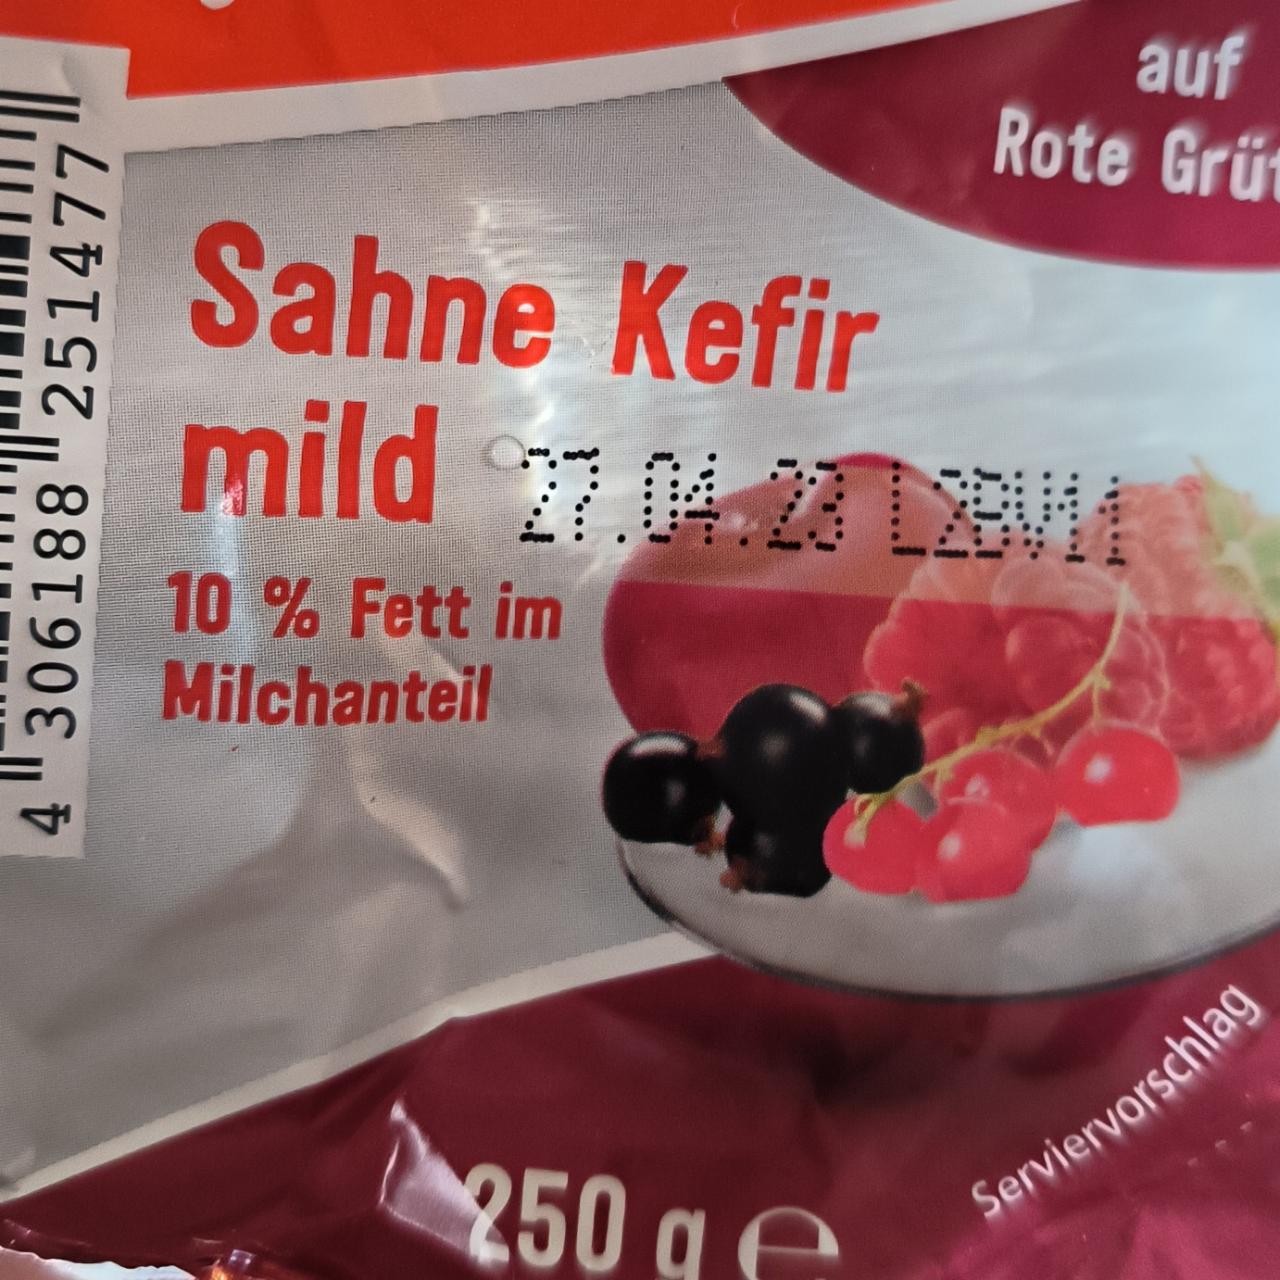 Zdjęcia - Sahne Kefir mild 10% Fett auf Rote Grütze Jeden Tag